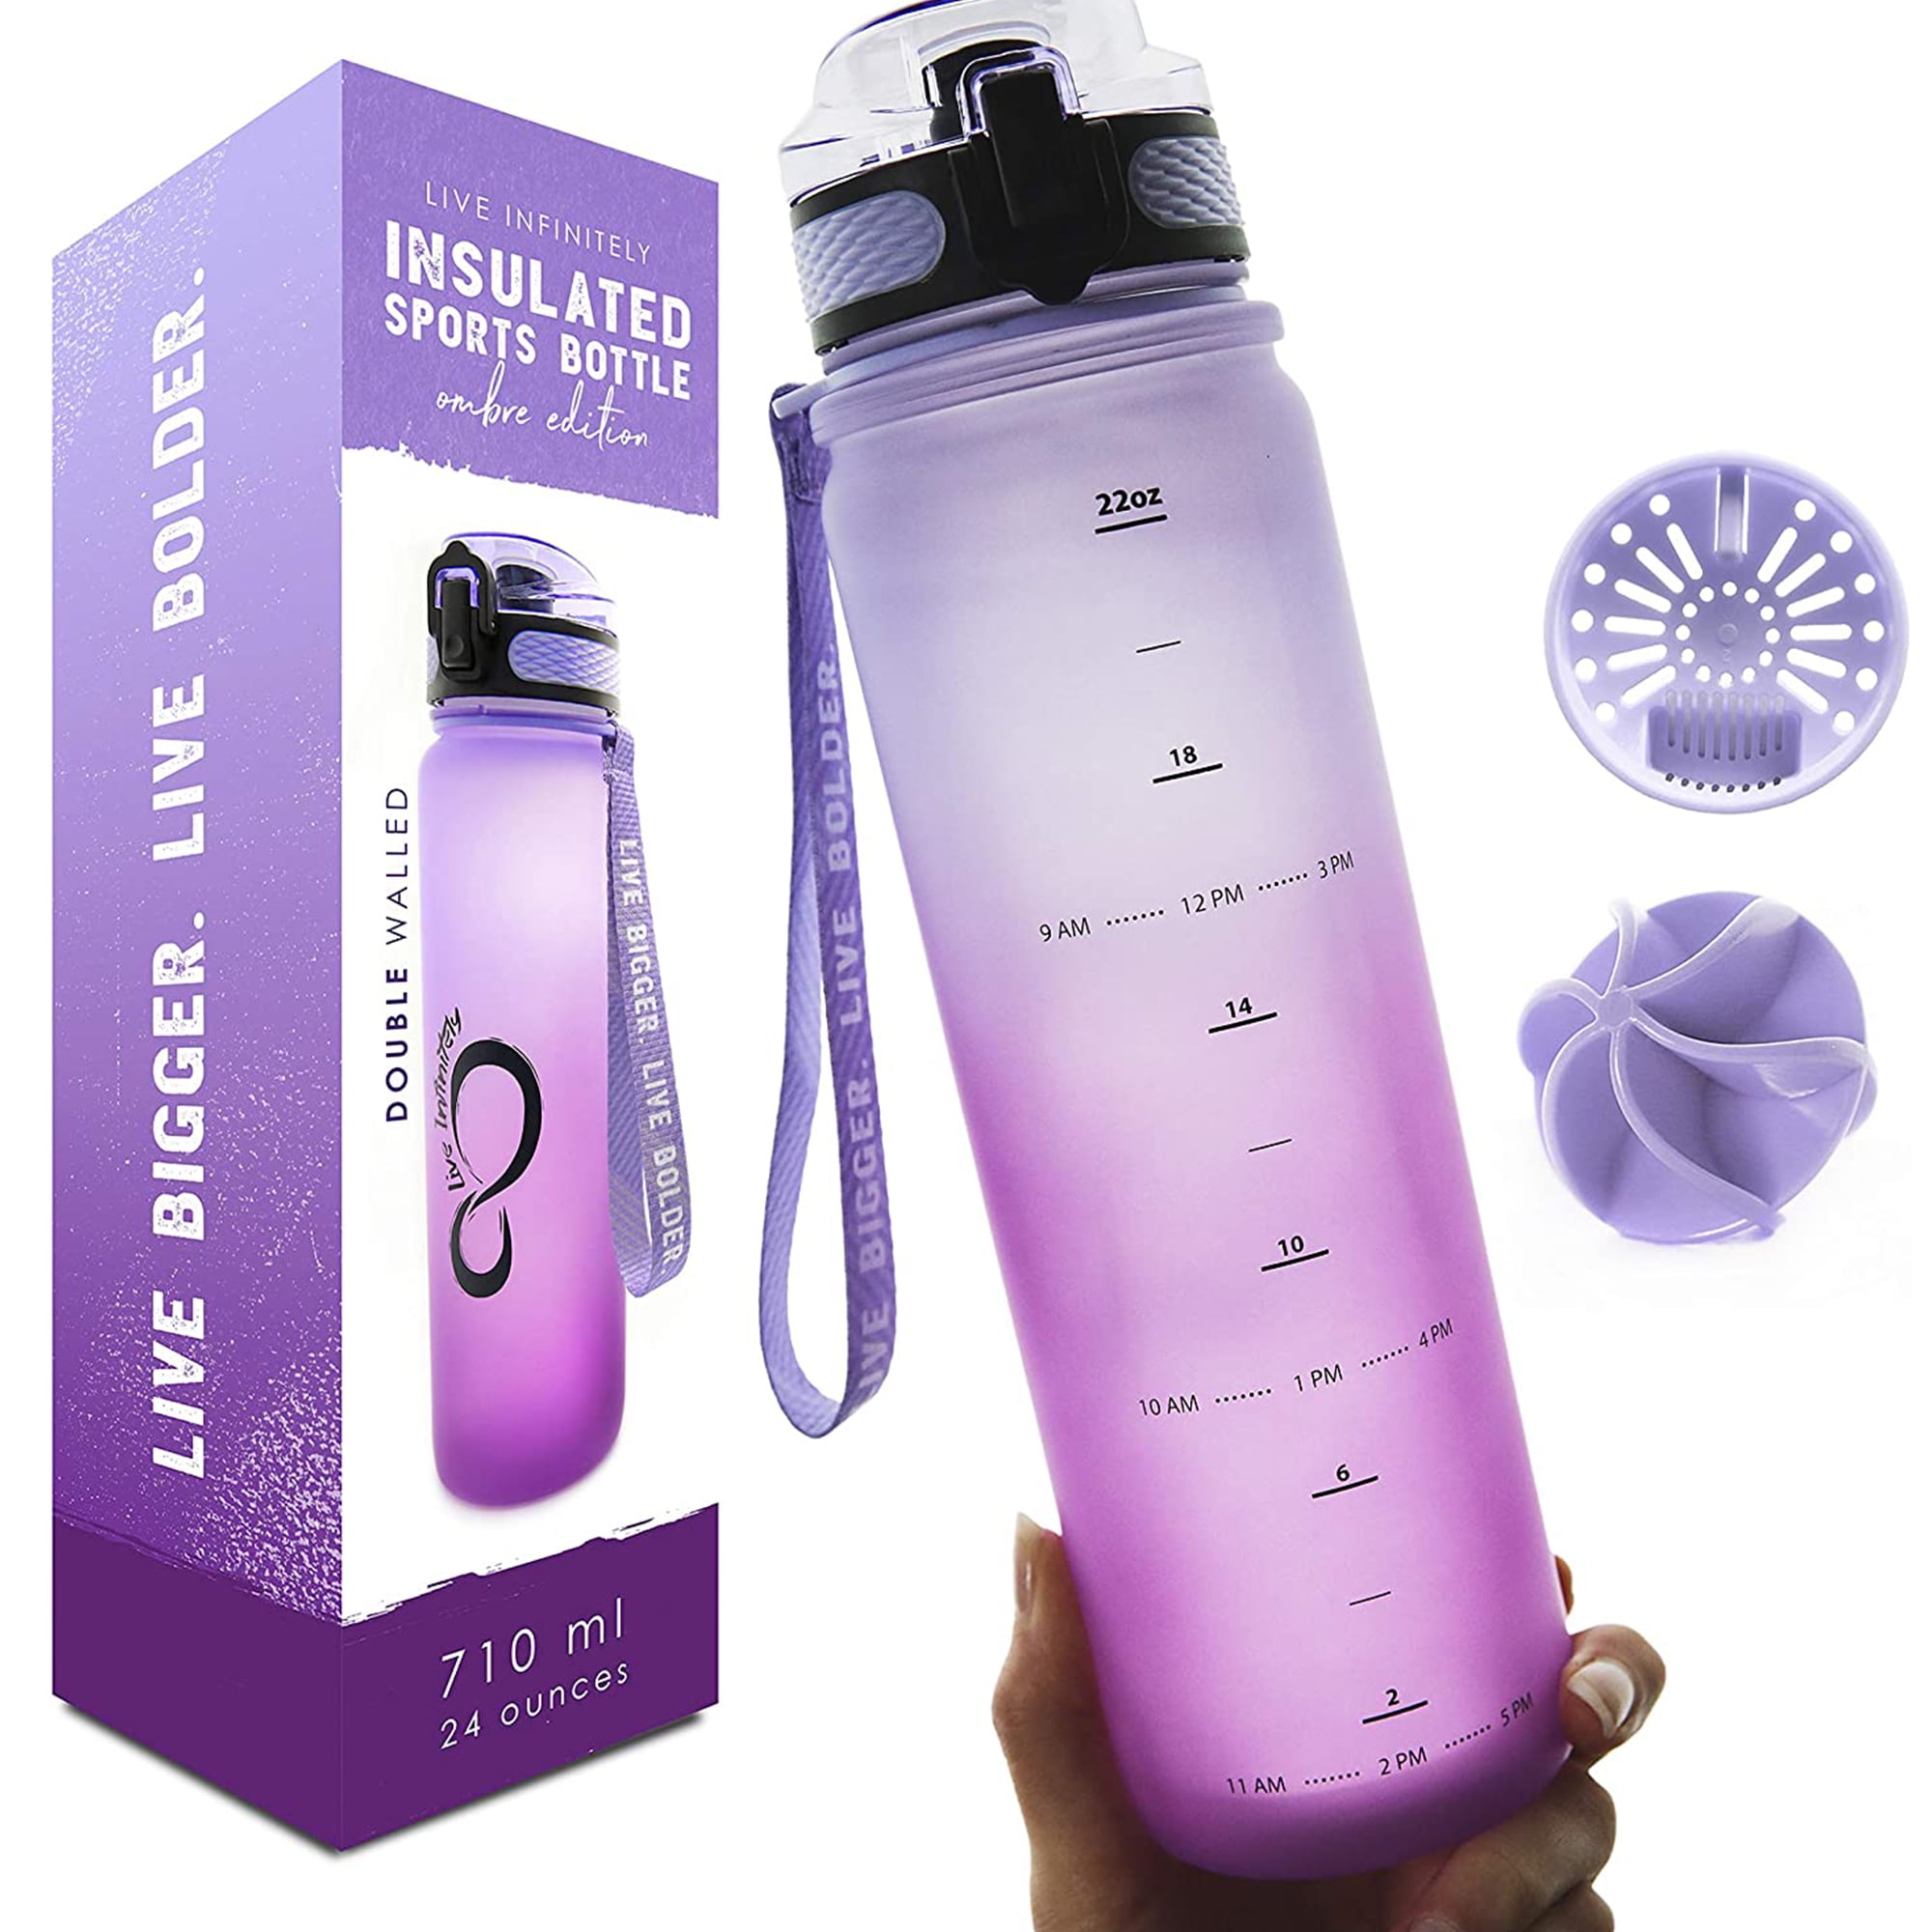 Live Infinitely 20 Oz Kids Water Bottle with Straw BPA Free Water Bottle,  Galaxy 